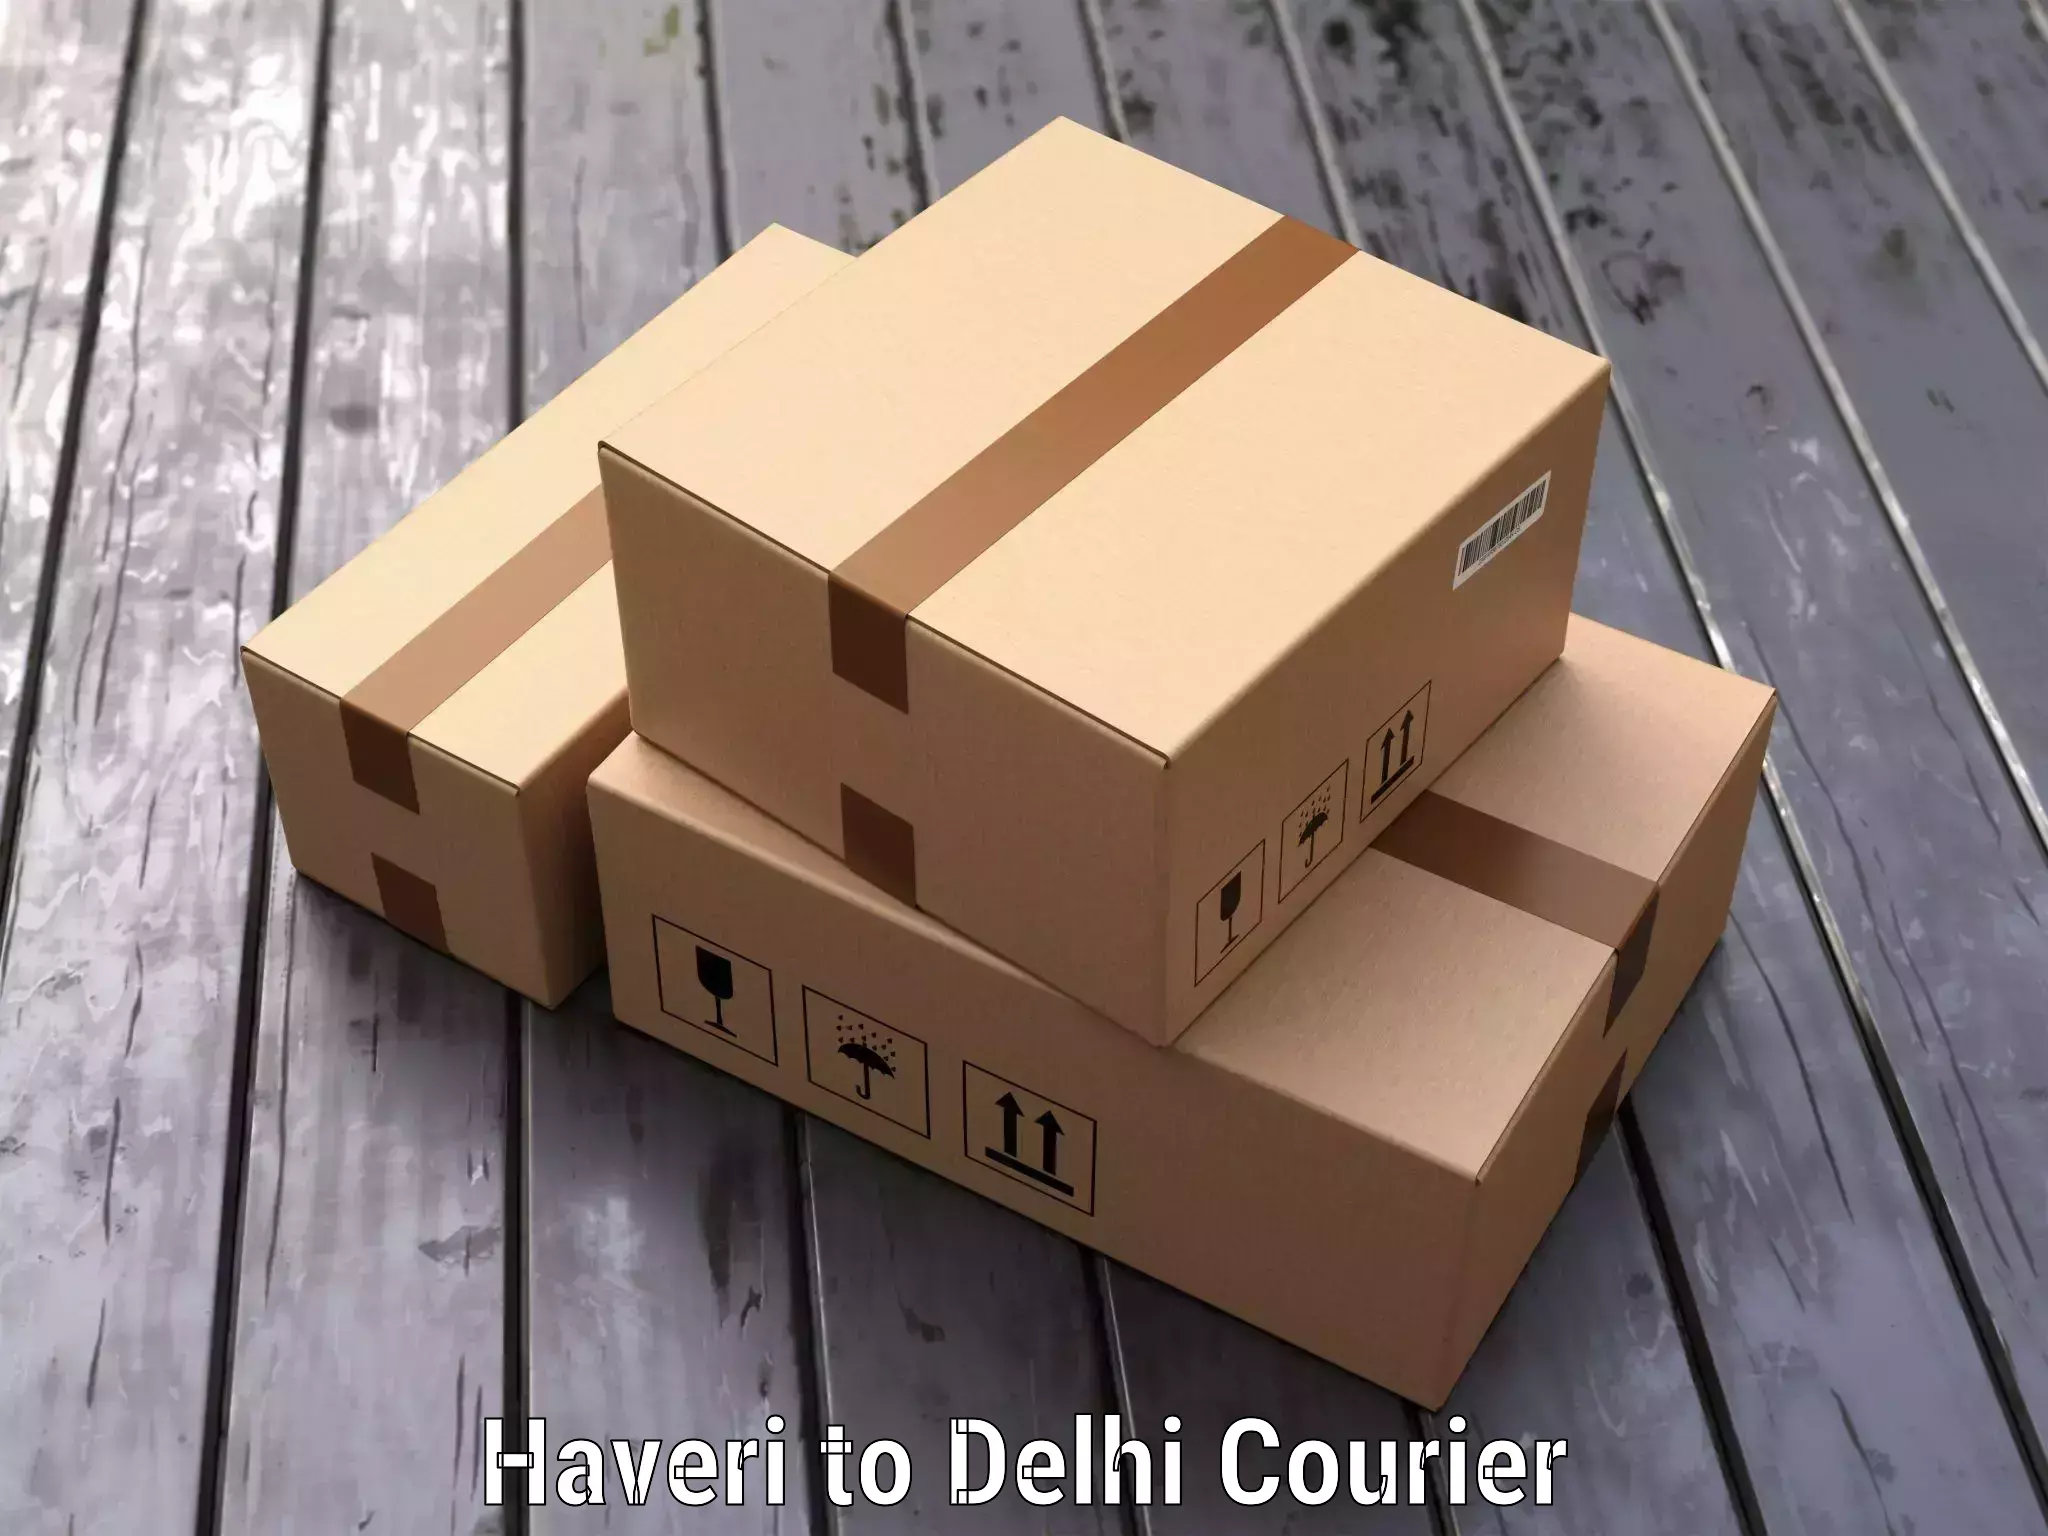 Luggage delivery network Haveri to Delhi